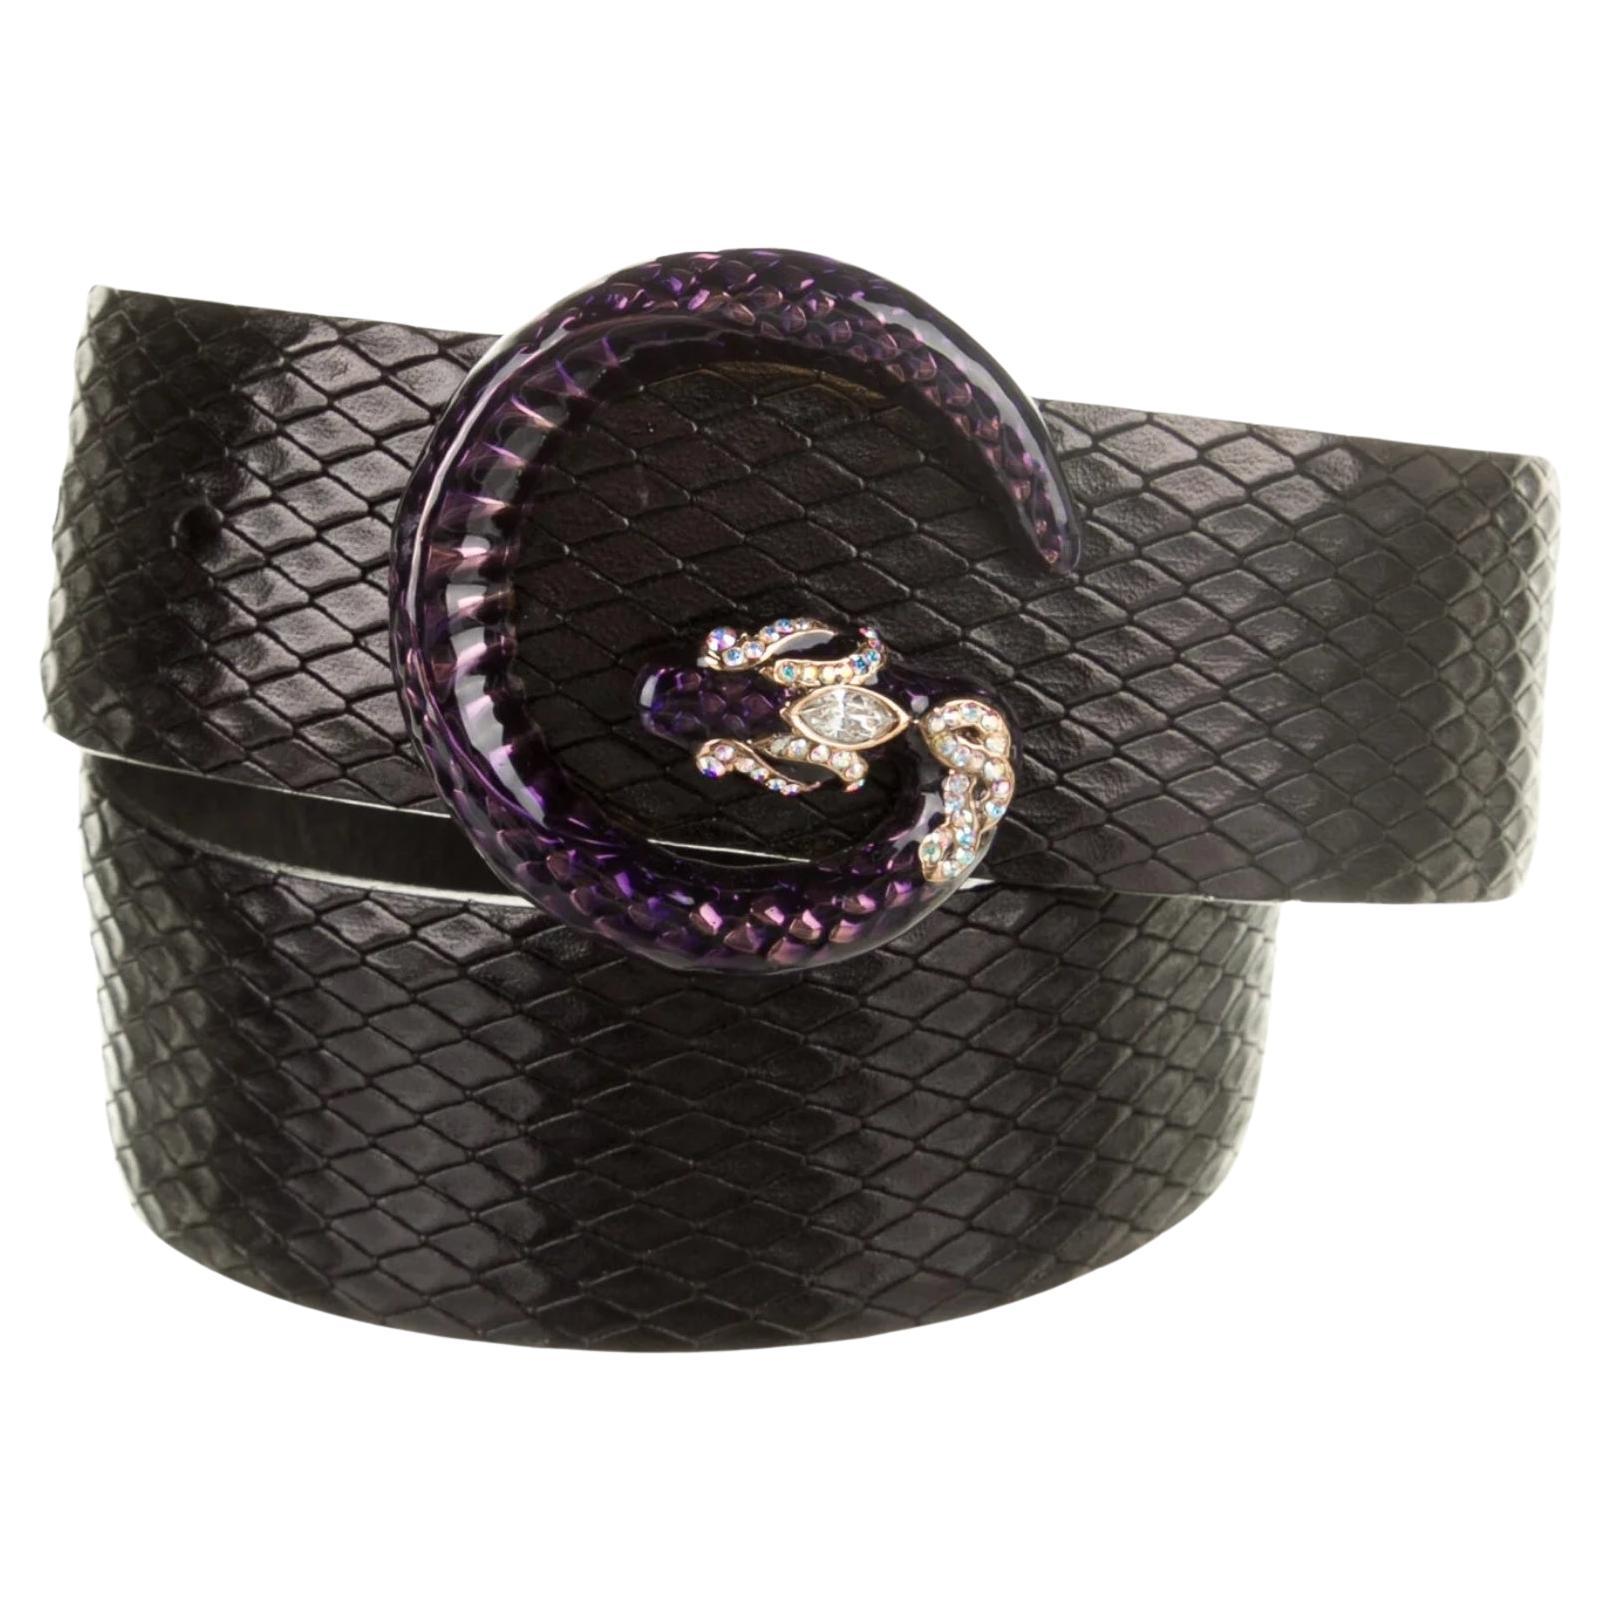 Gucci Tom for Gucci Ceinture en python, cuir noir, logo G violet, serpent (85/34)